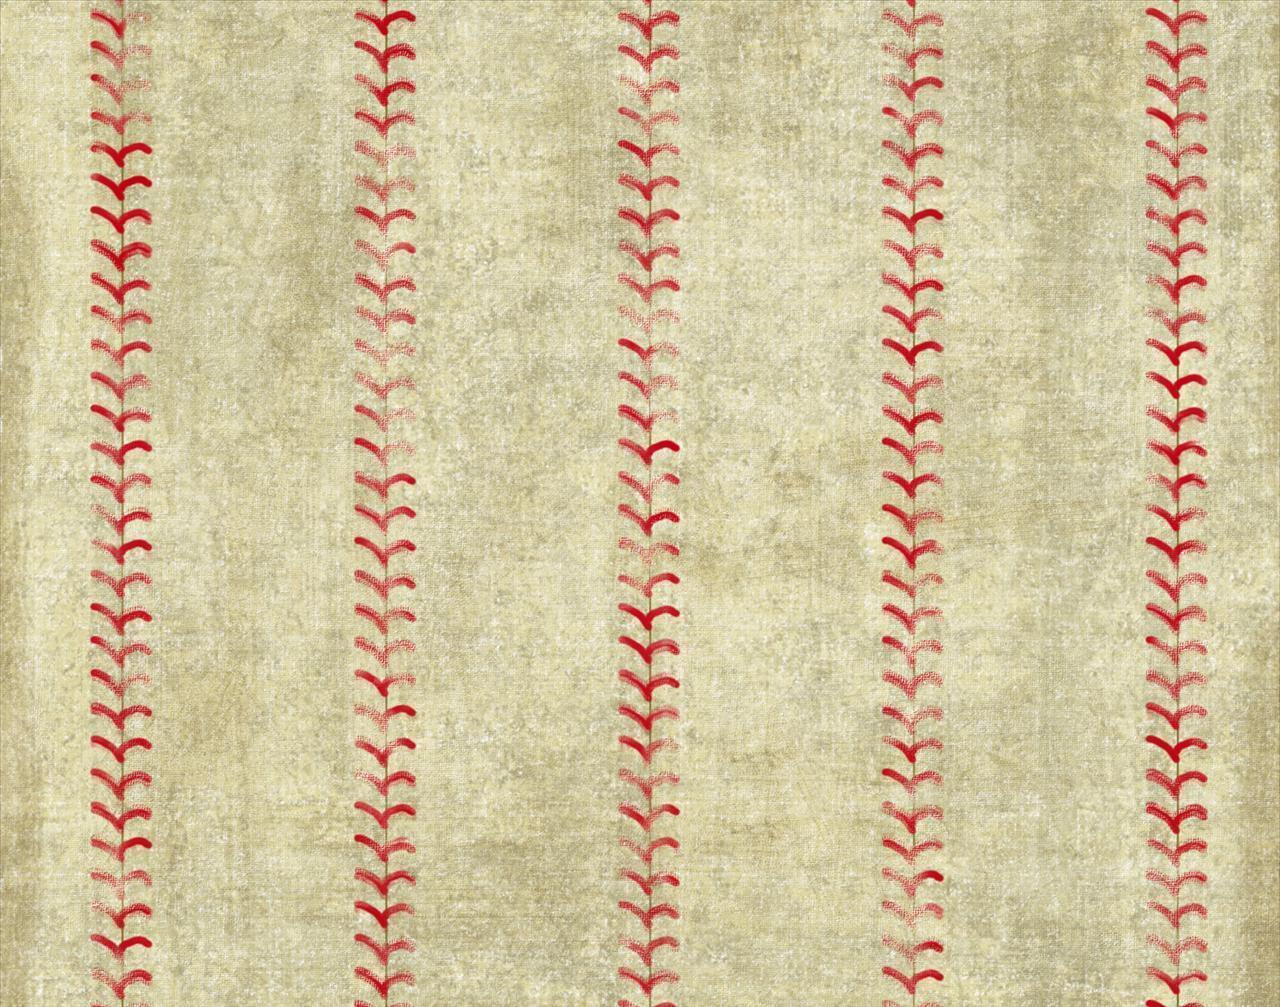 Play Ball! Enjoy A Gallery Of Baseball Themed Wallpaper